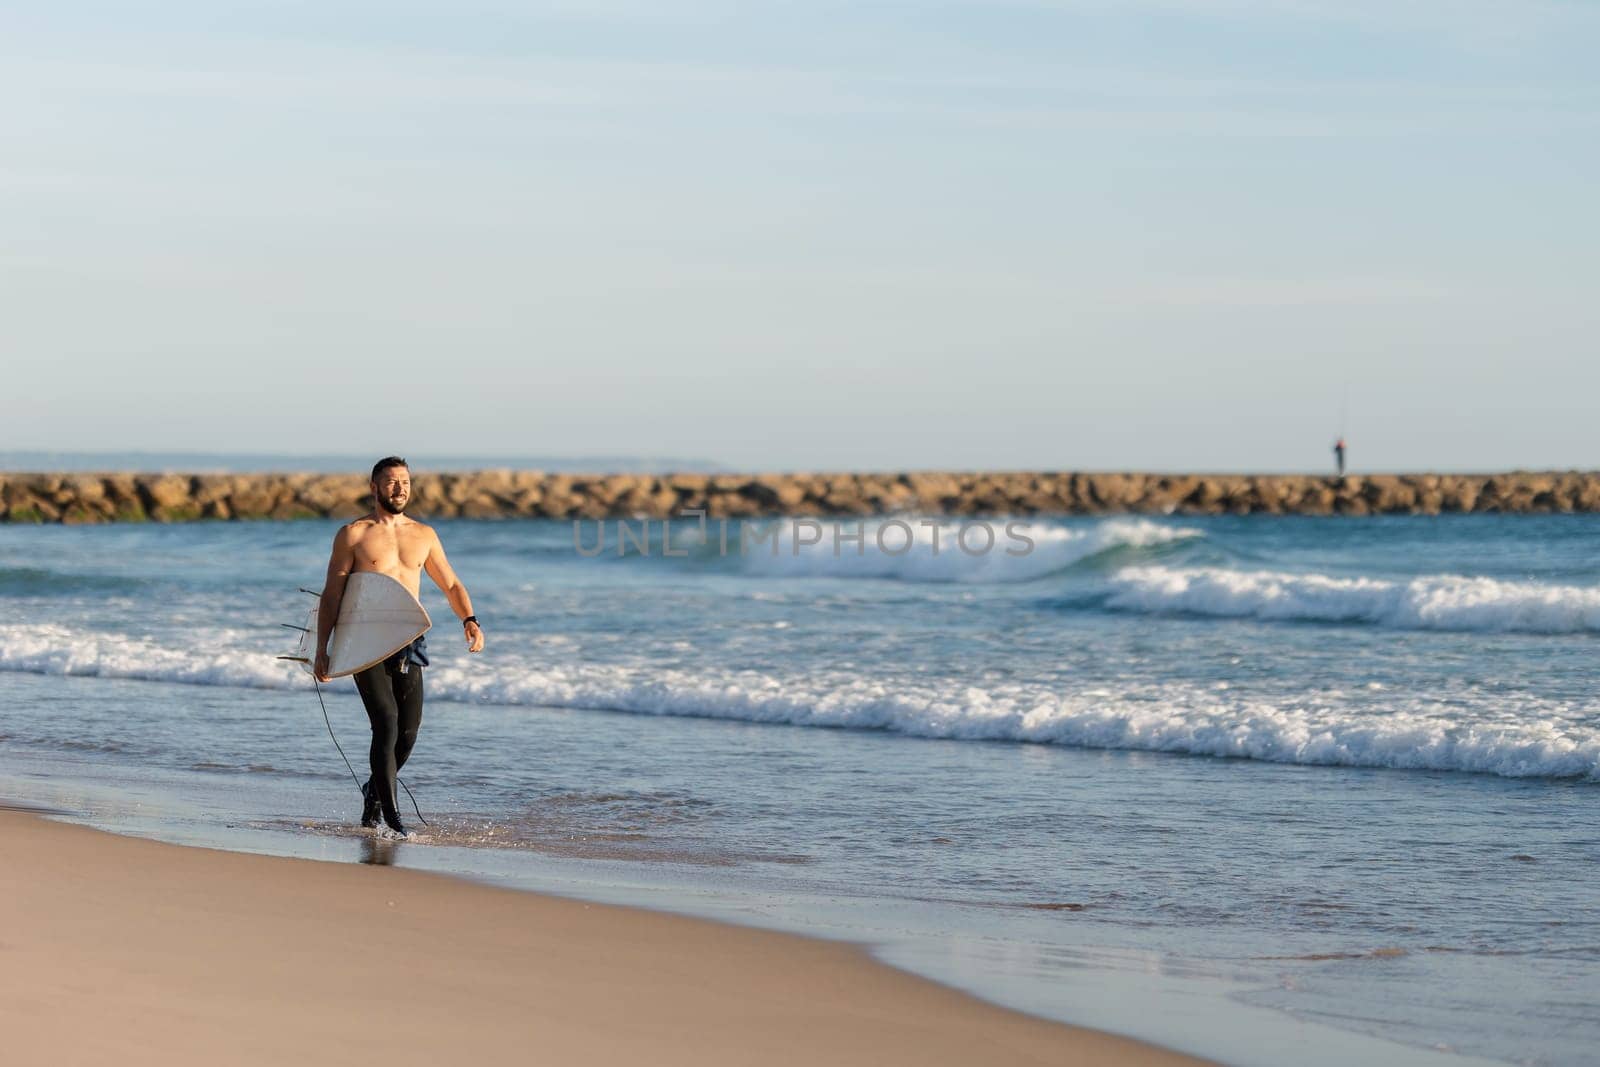 A man surfer with naked torso walking on the seashore. Mid shot